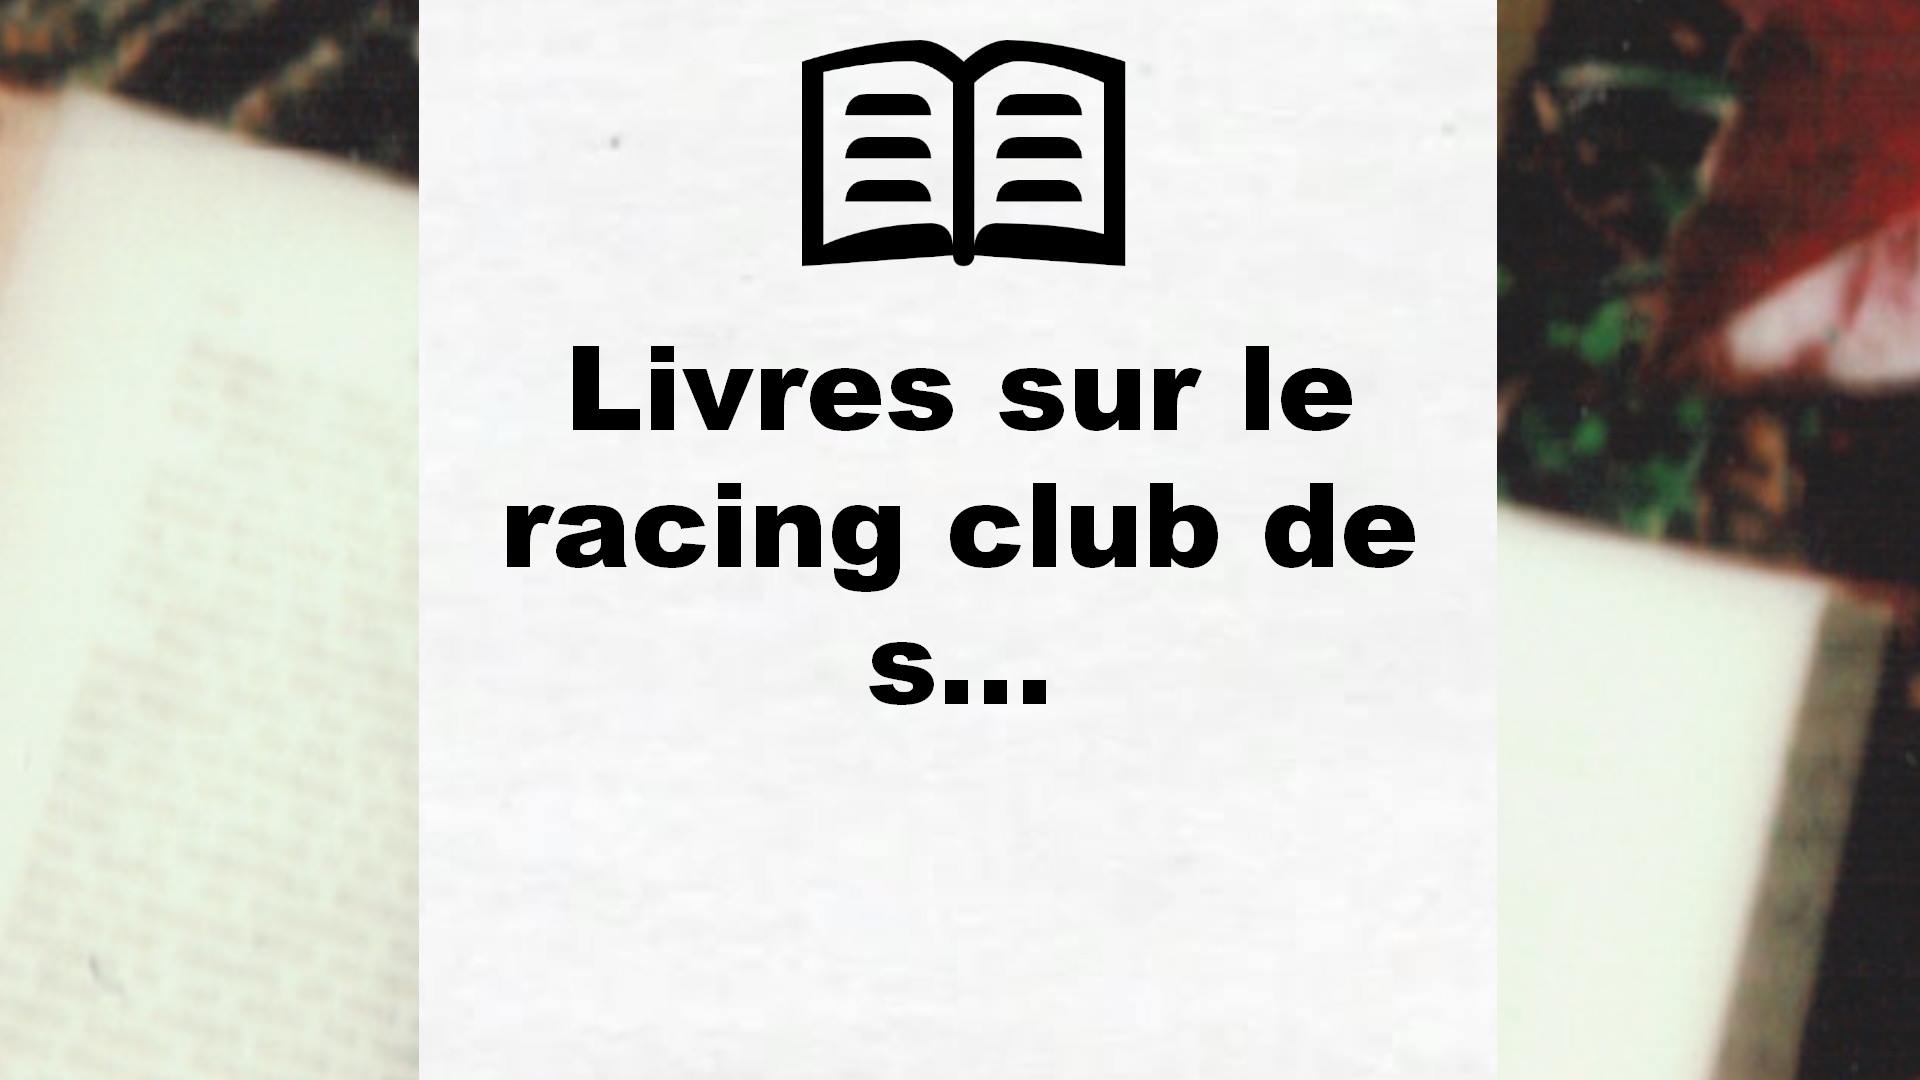 Livres sur le racing club de strasbourg